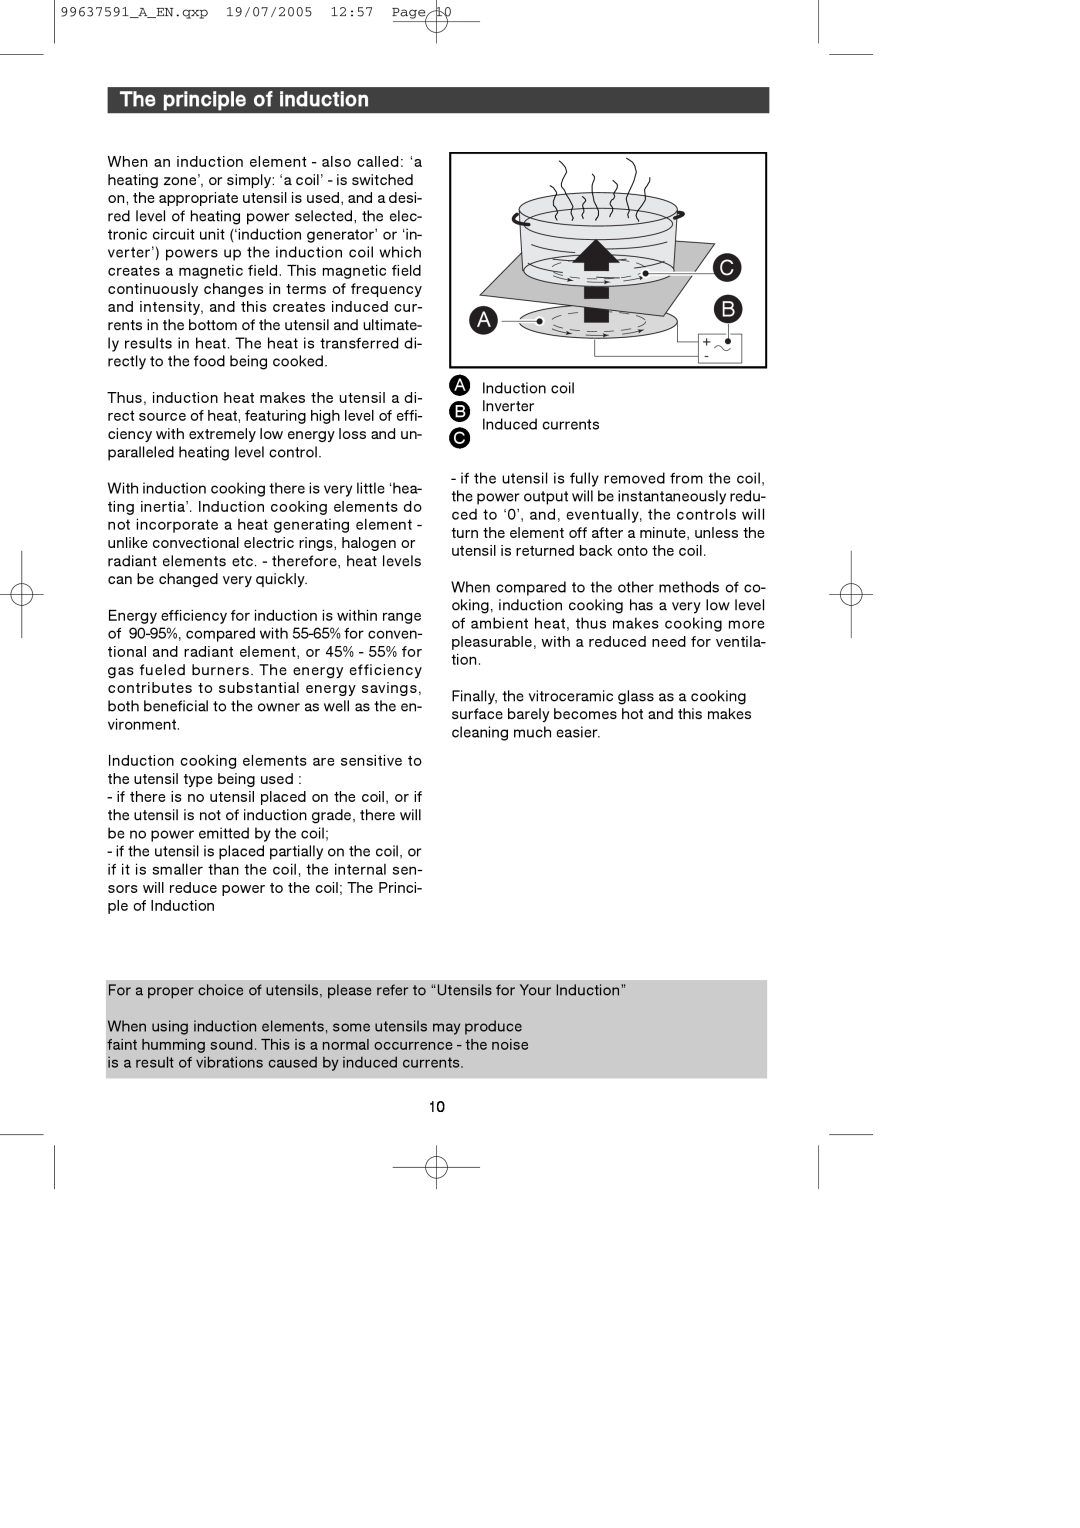 Kuppersbusch USA EKI326UL manual The principle of induction 